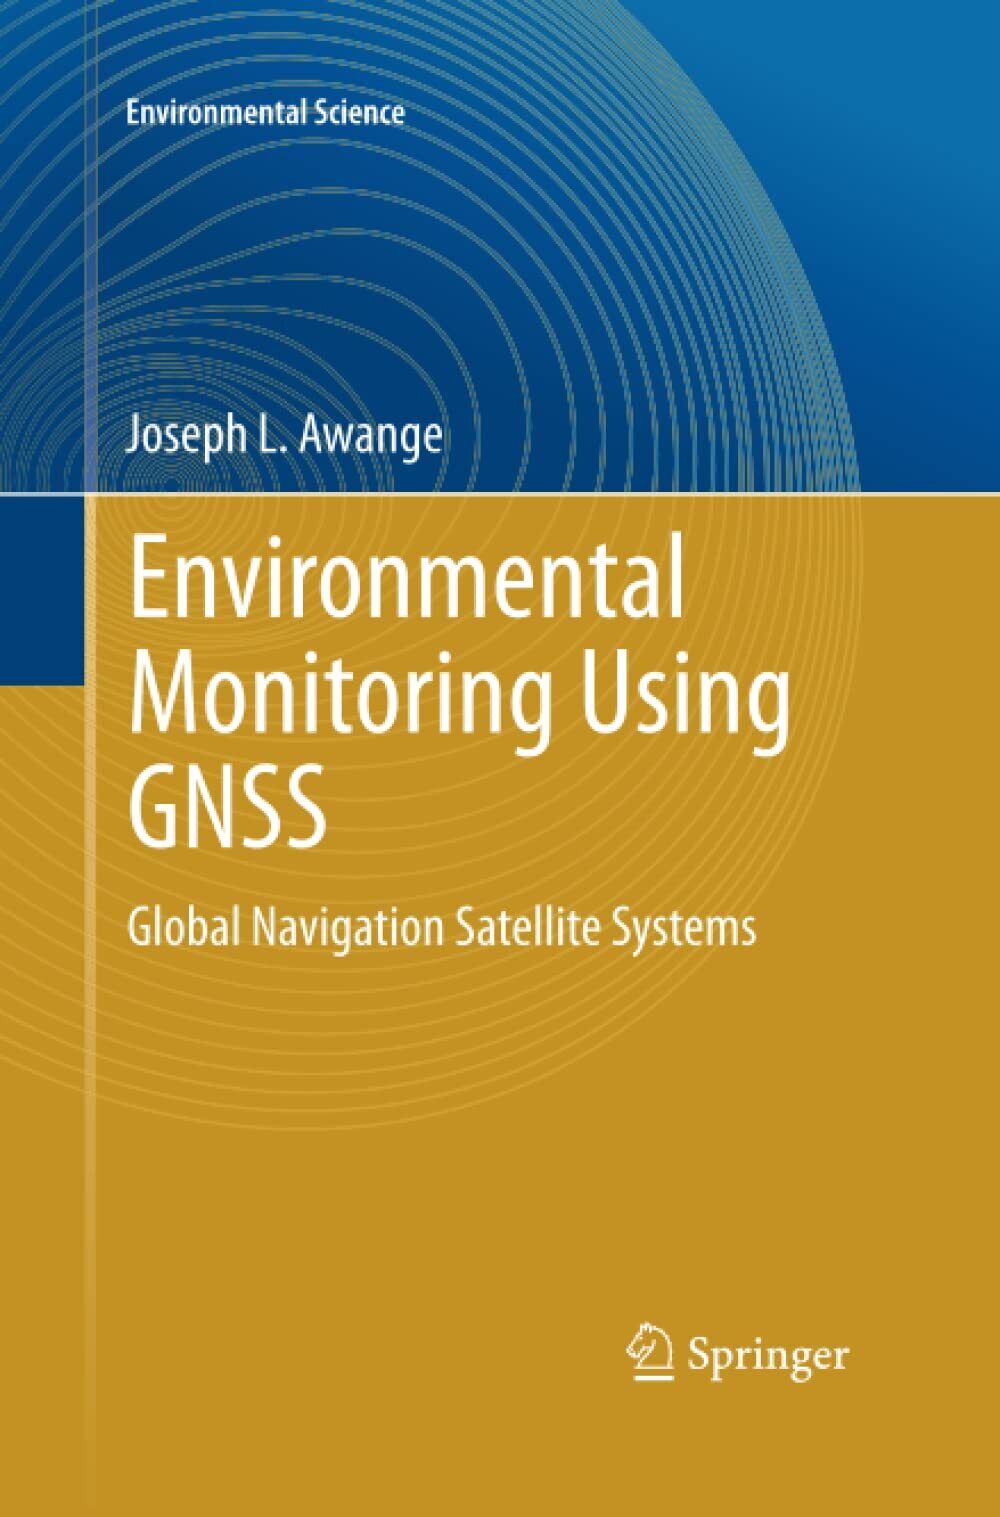 Environmental Monitoring using GNSS - Joseph L. Awange - Springer, 2016 libro usato